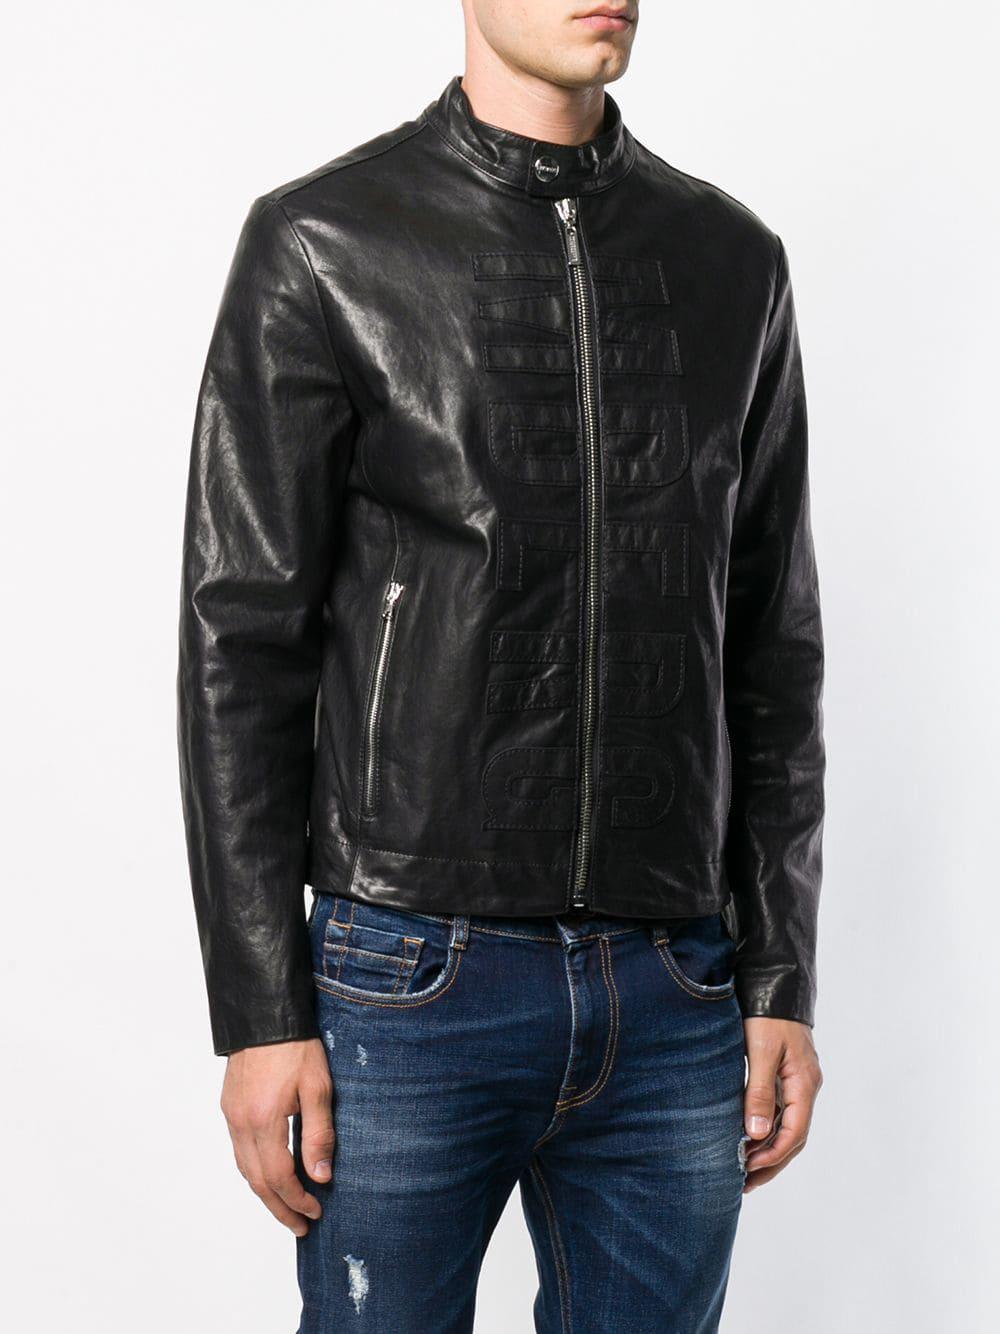 Dirk Bikkembergs Cotton Logo Leather Jacket in Black for Men - Lyst